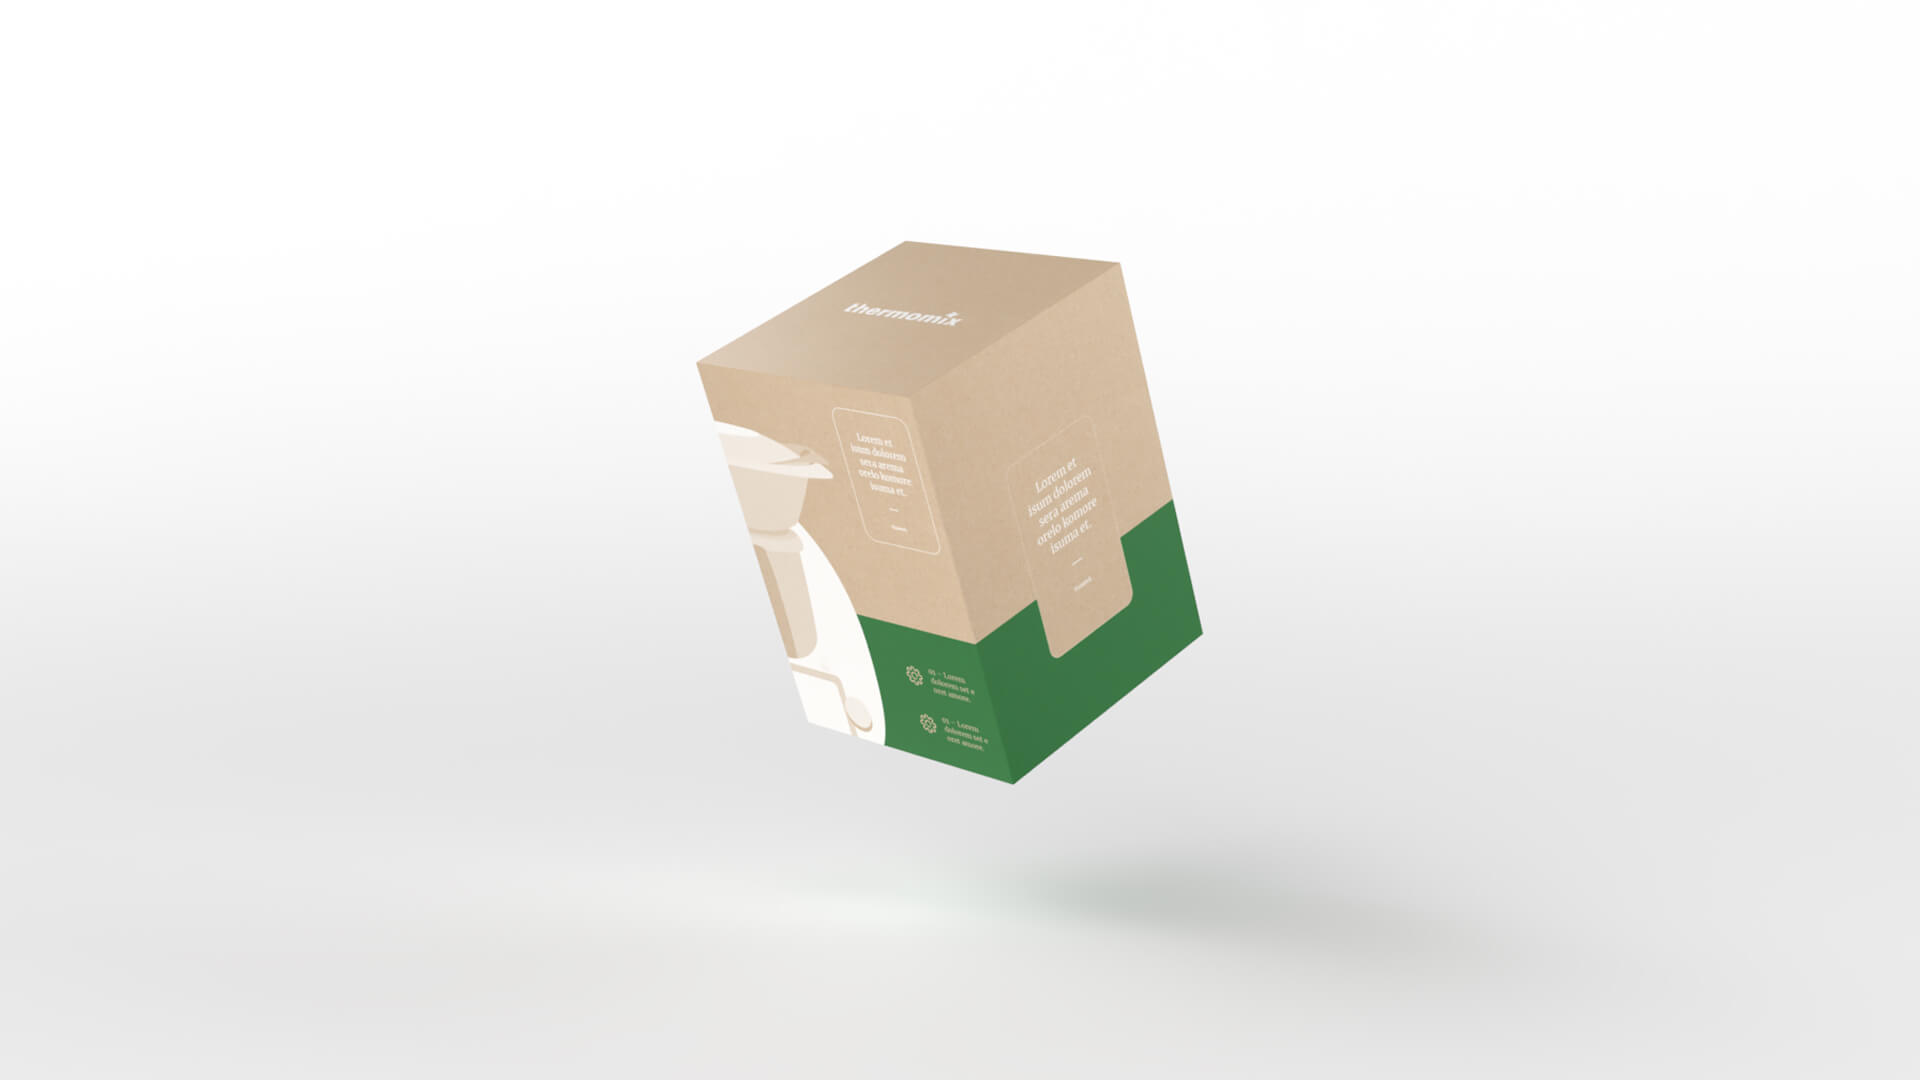 Vorwerk thermomix® Packaging 3D Rendering Perspective 1 - Philipp Mandler